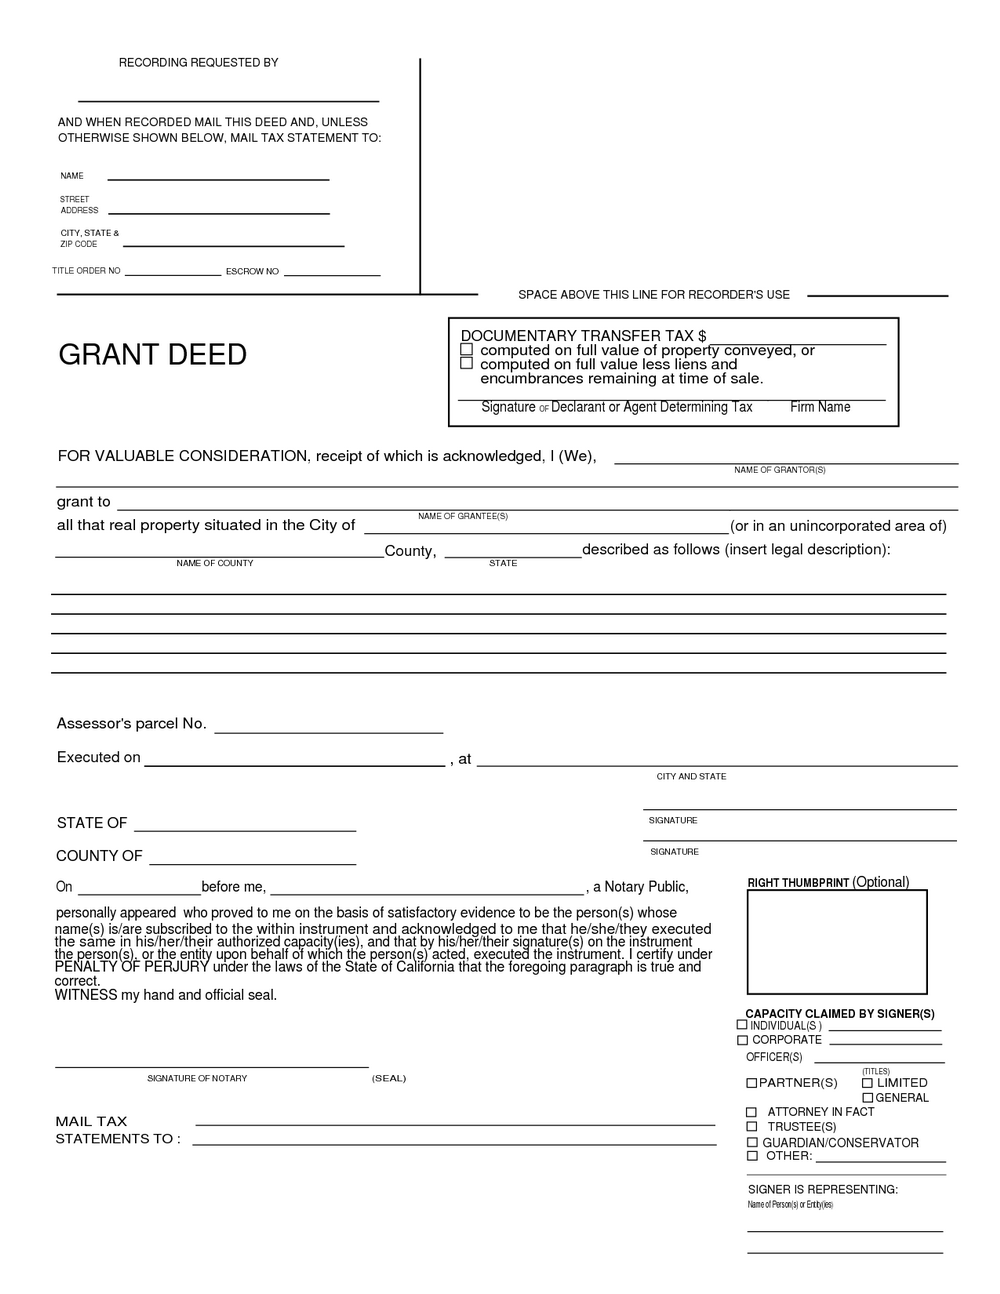 Grant Deed Form Santa Clara County Universal Network